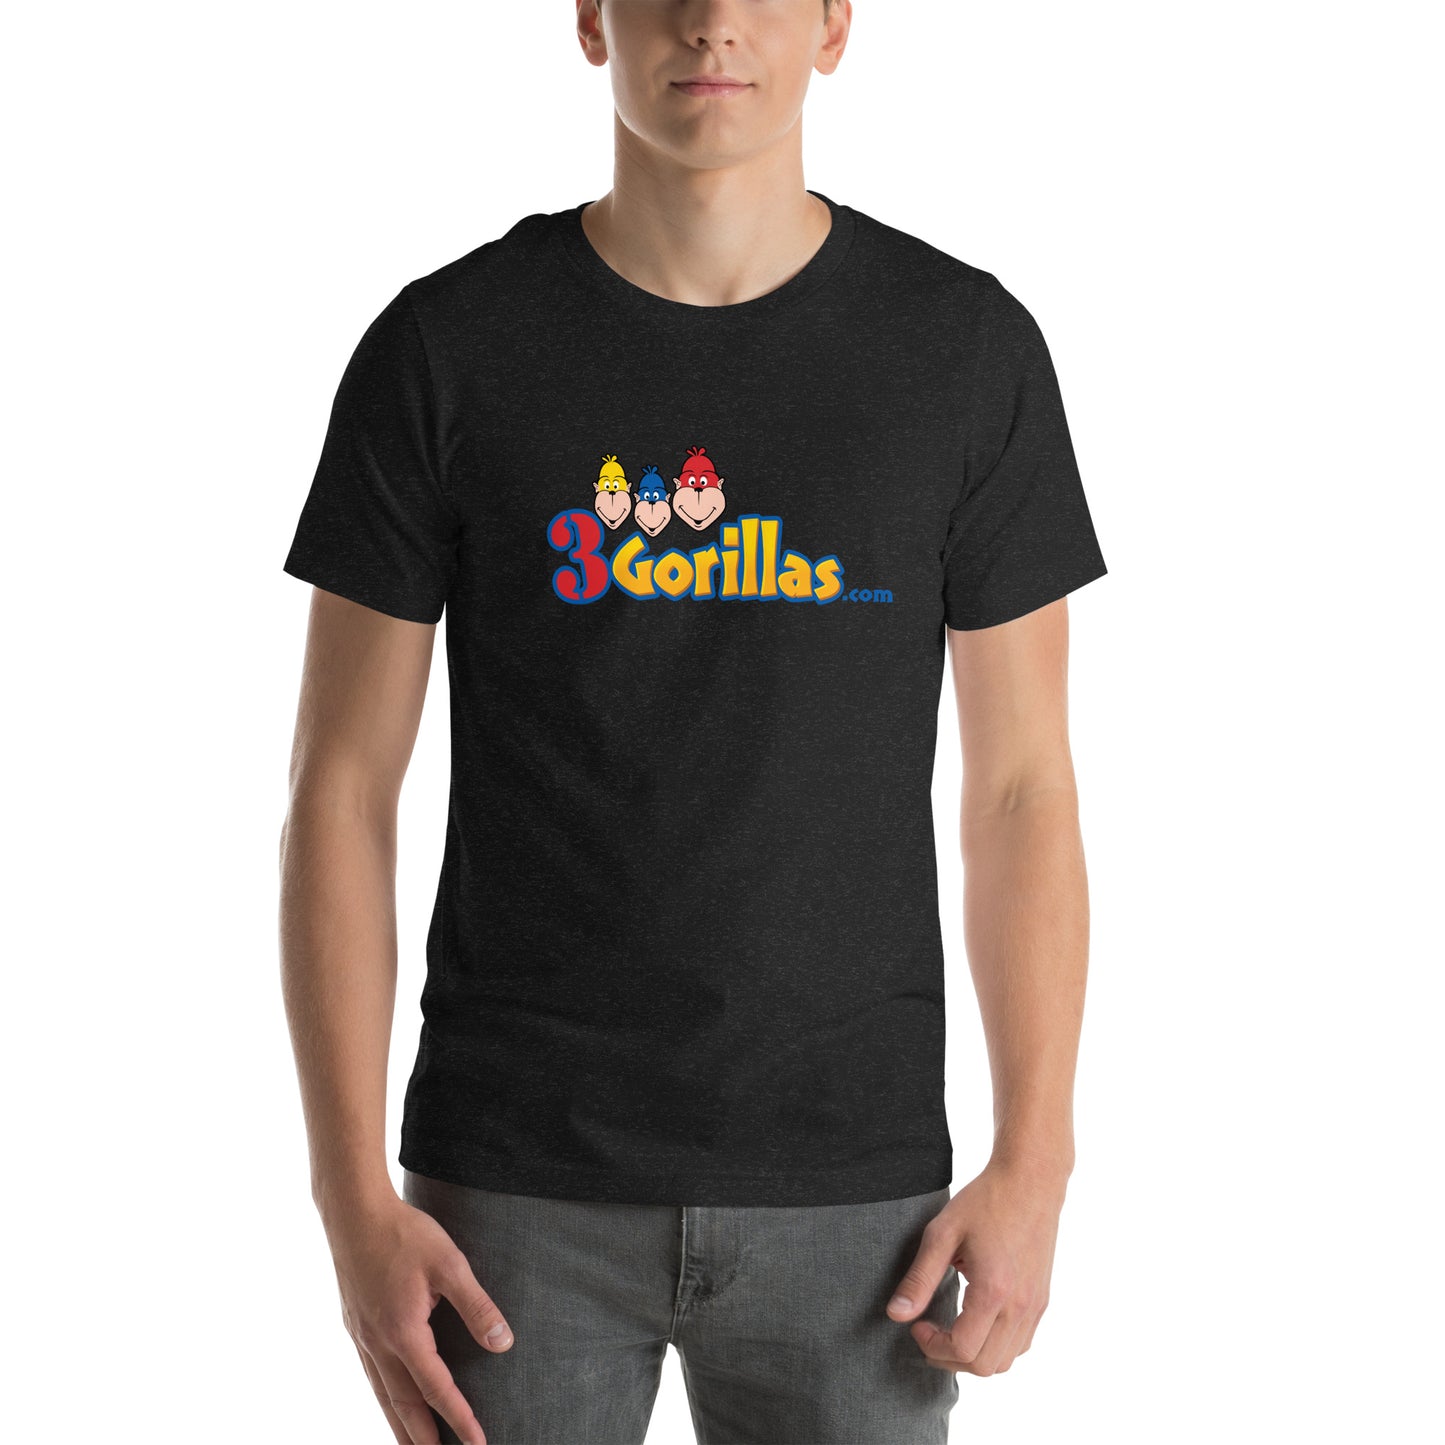 3Gorillas.com Logo Unisex t-shirt